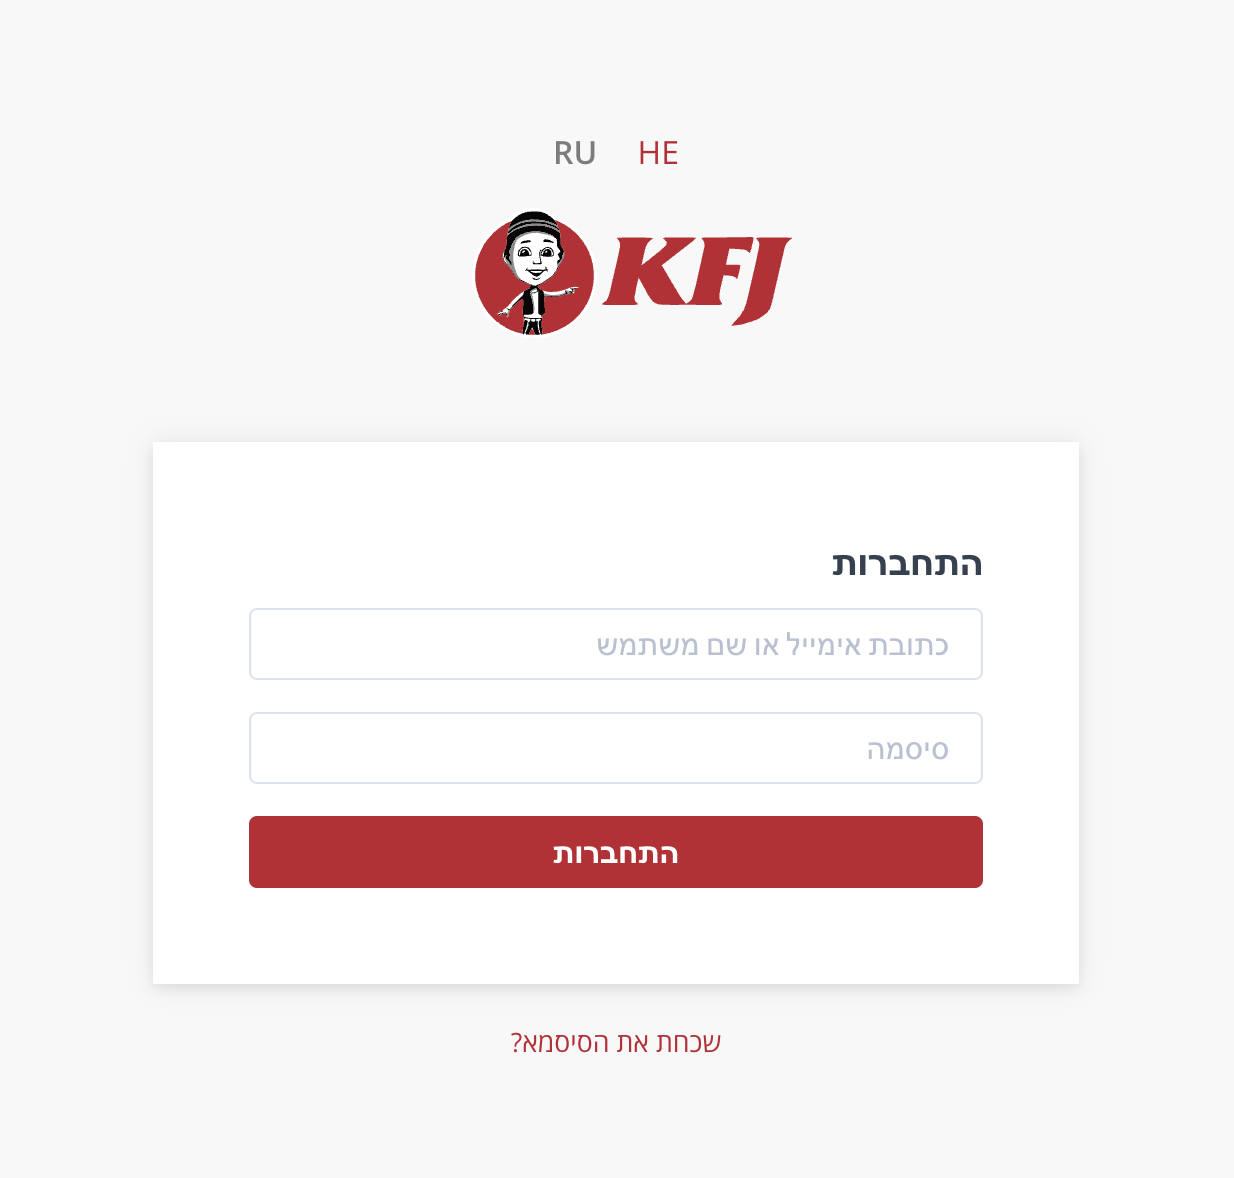 KFJ login page